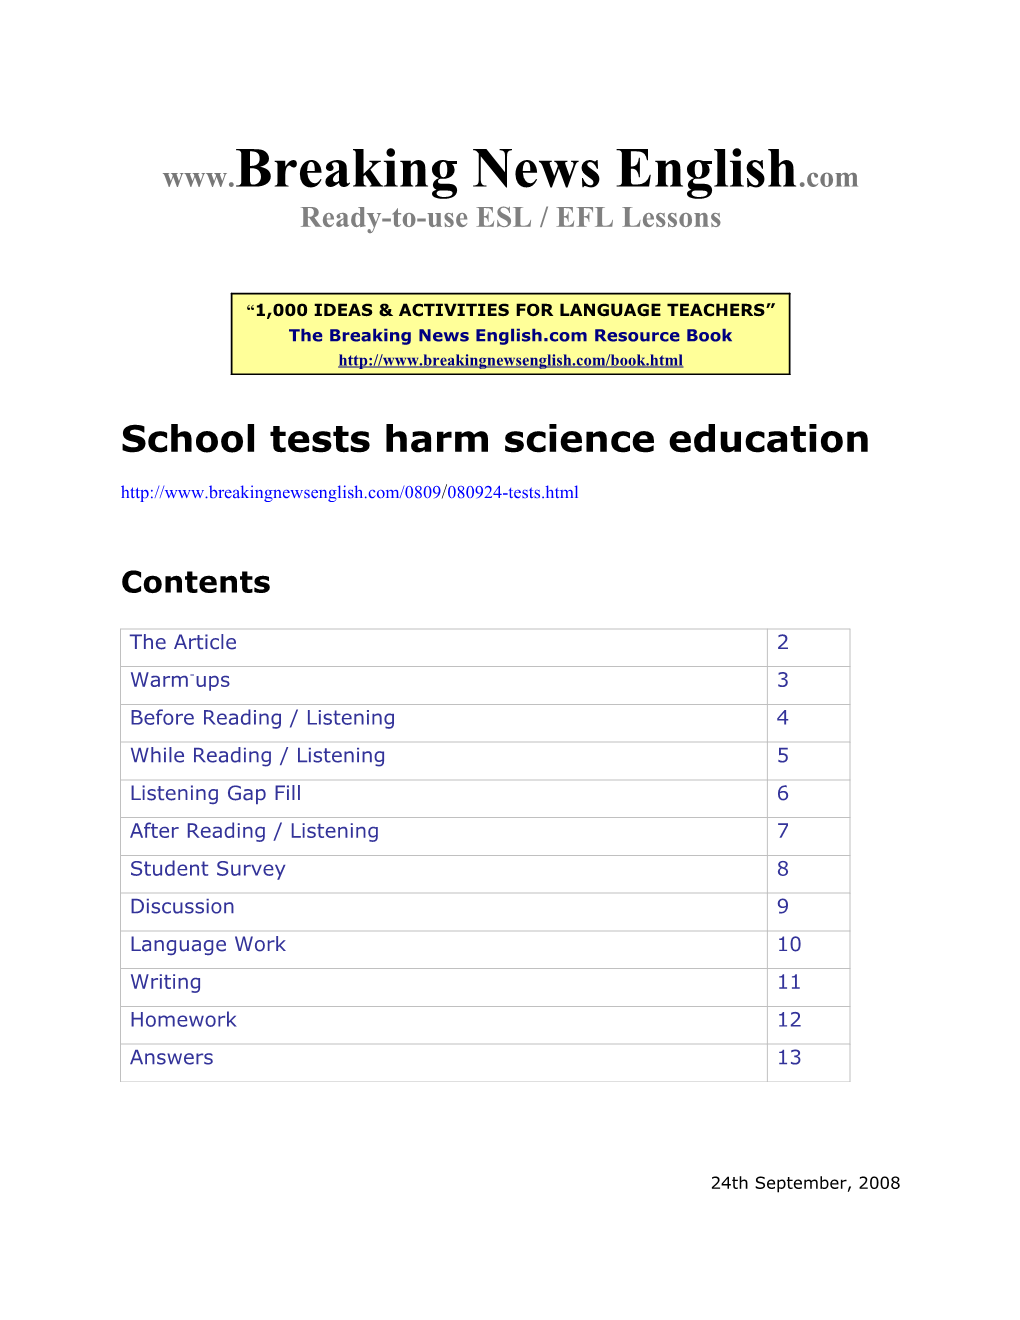 ESL Lesson: School Tests Harm Science Education